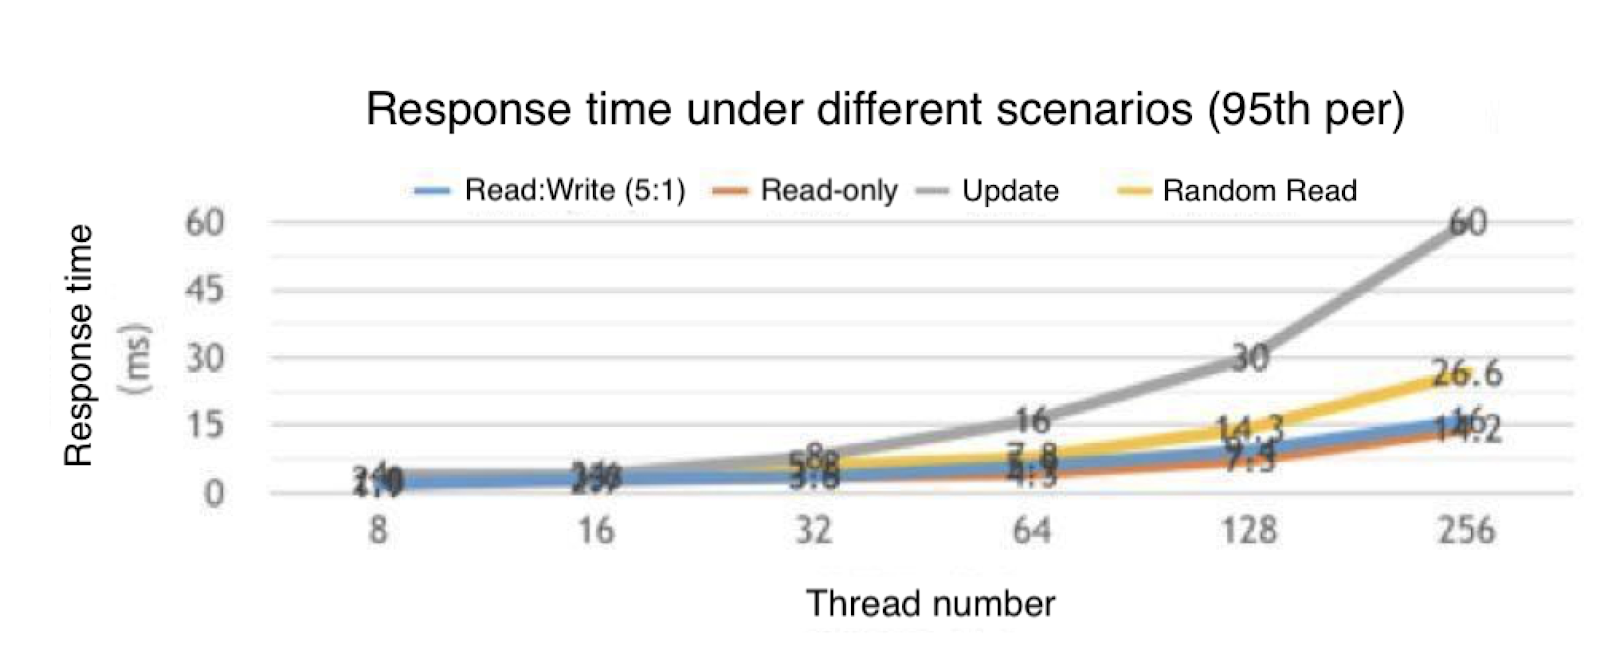 Response time under different scenarios